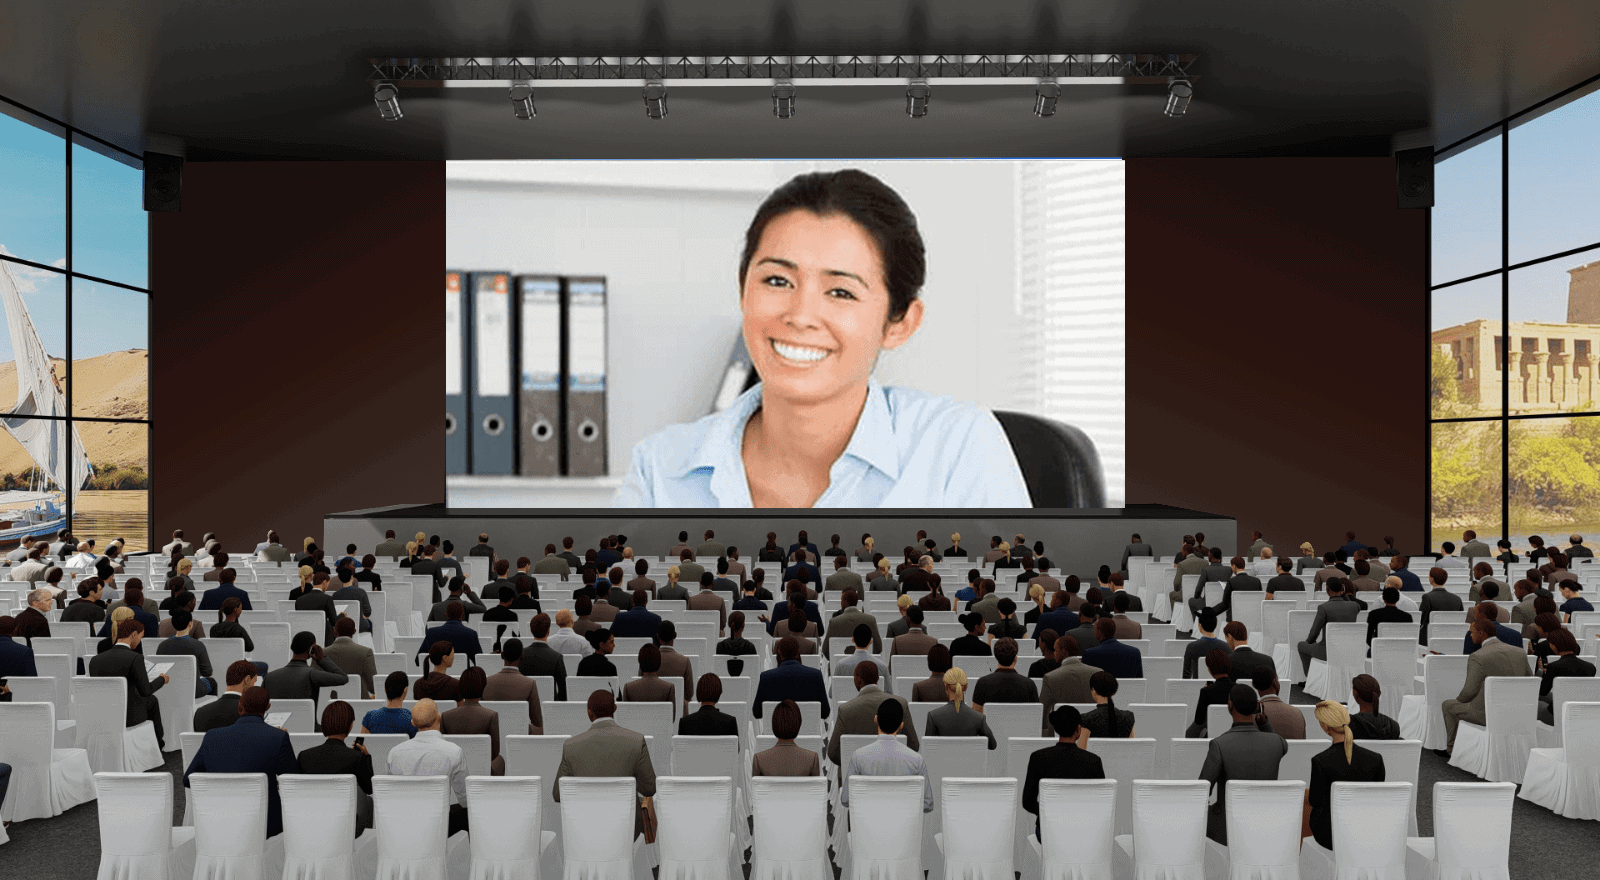 virtual auditorium in digital banking conferences 